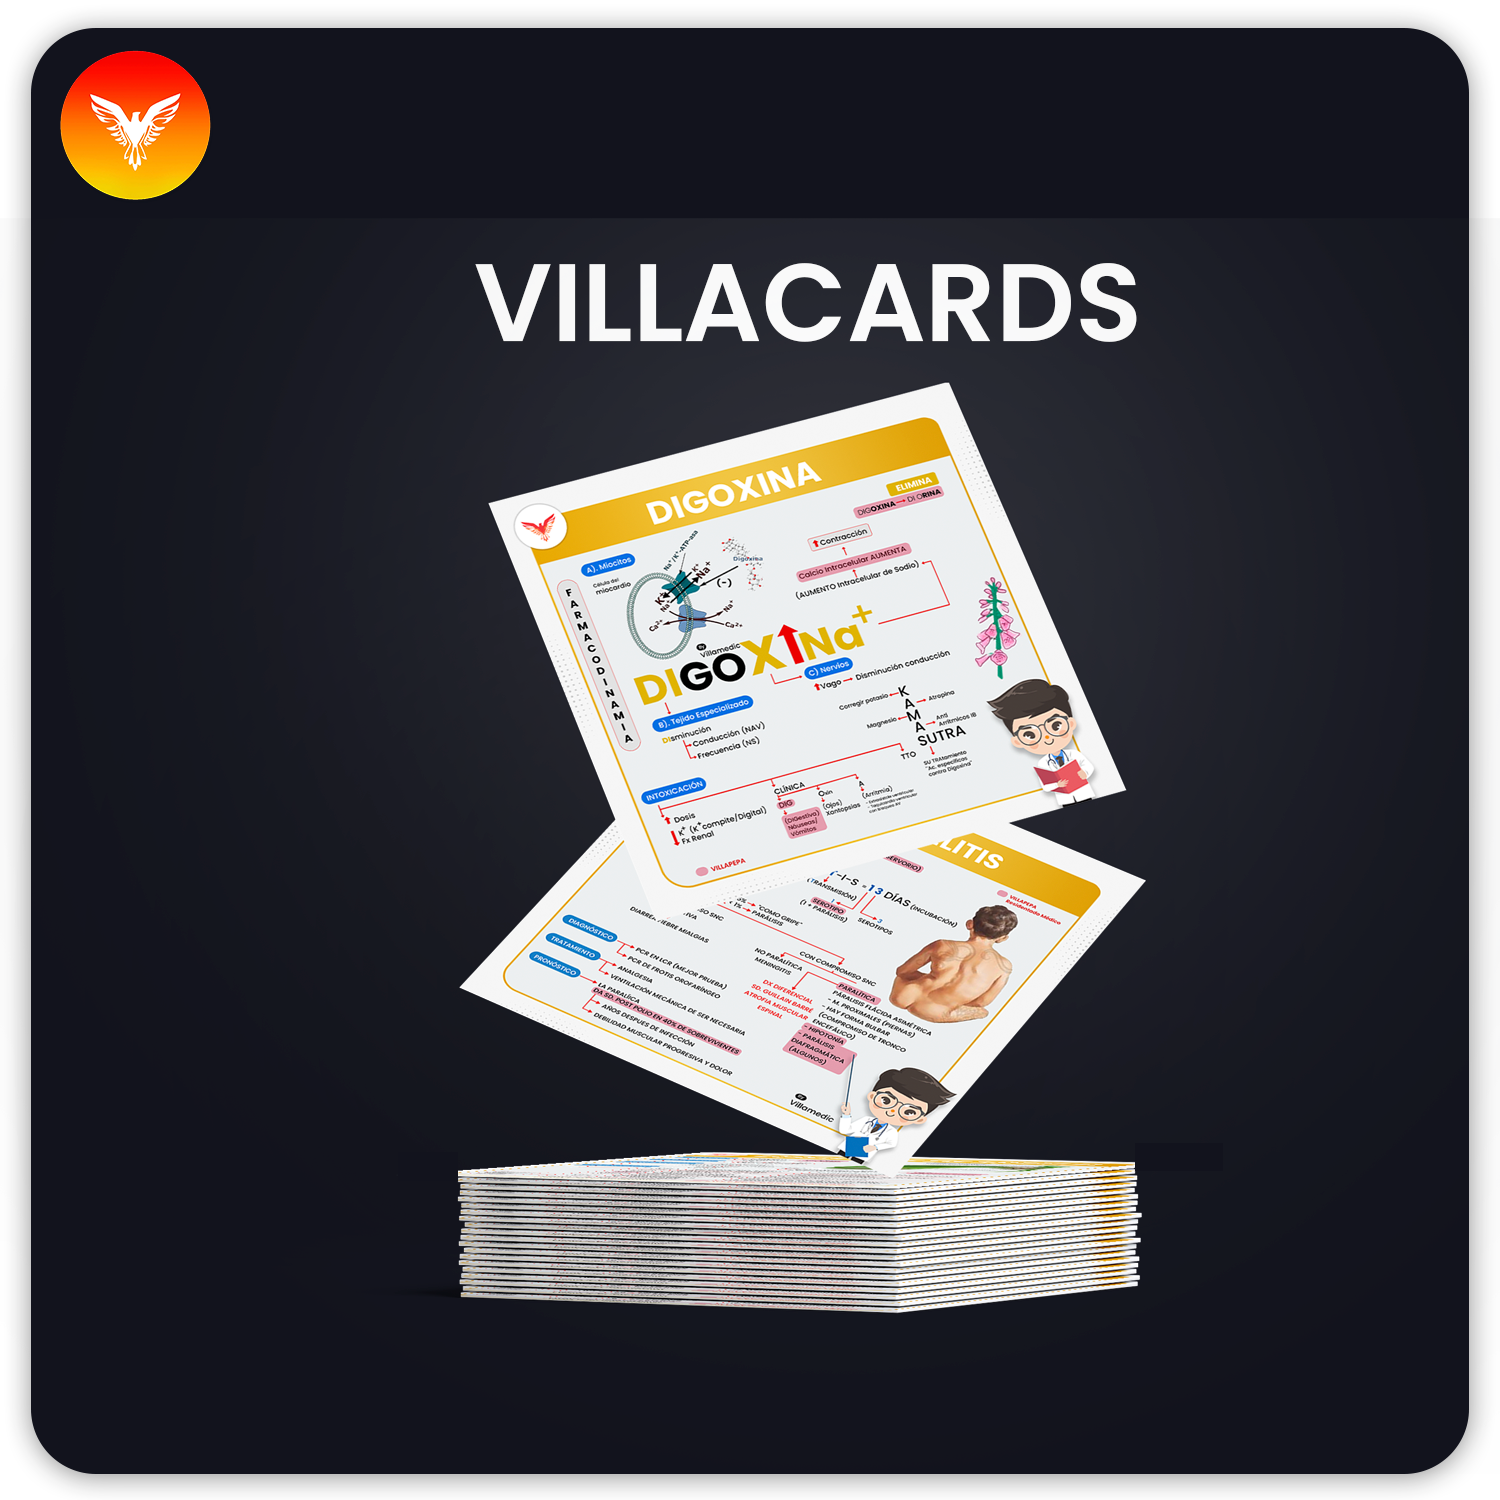 Course Image Villacards